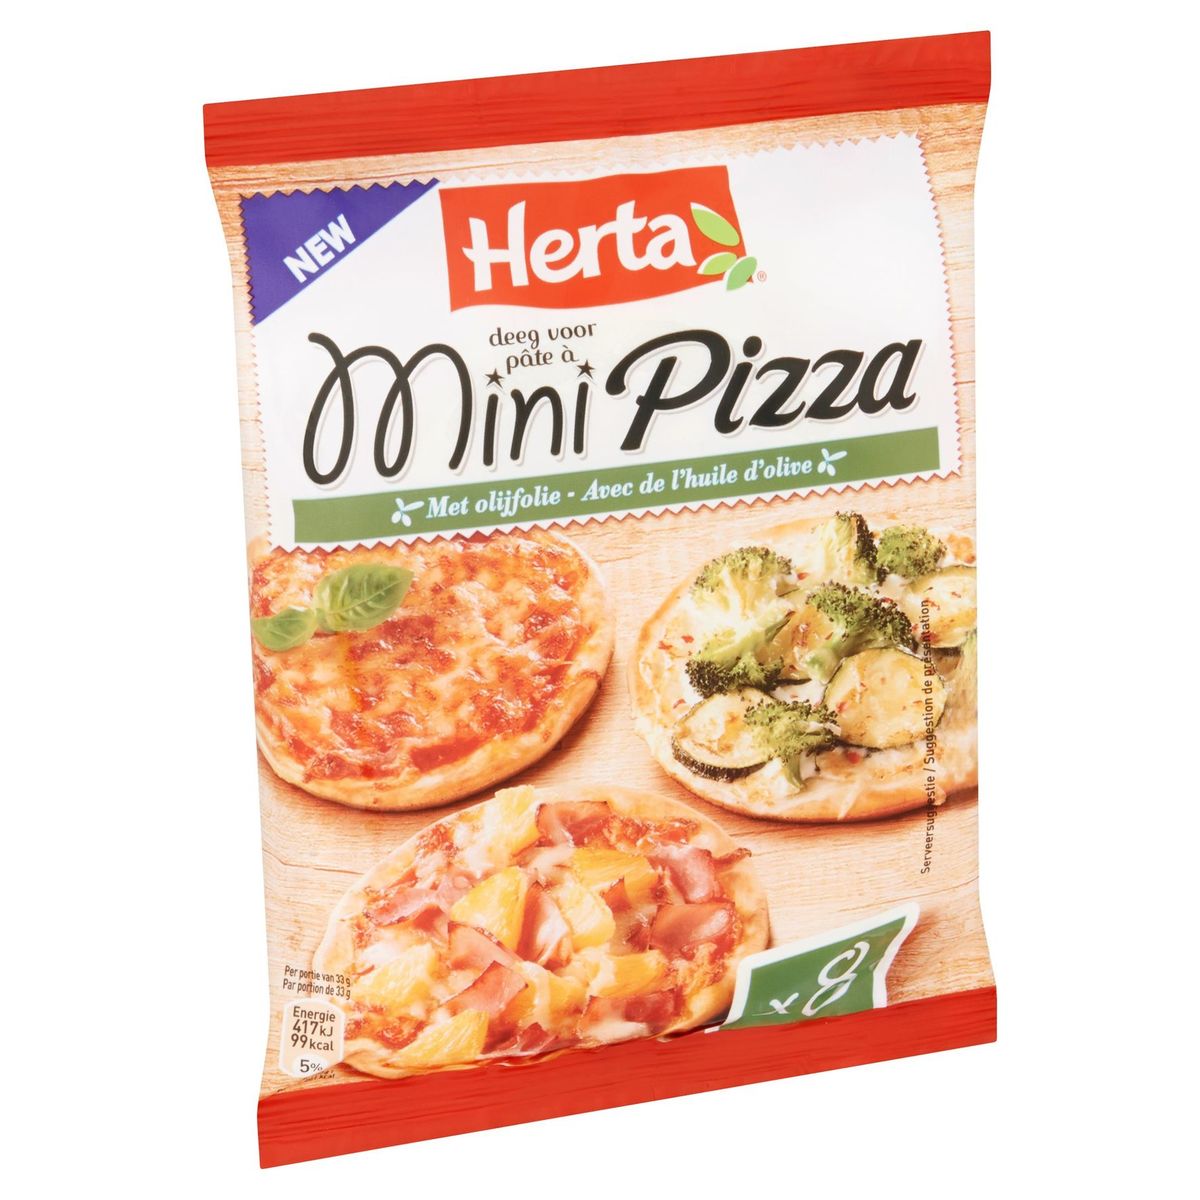 HERTA Pizzadeeg Mini Pizza 265 g